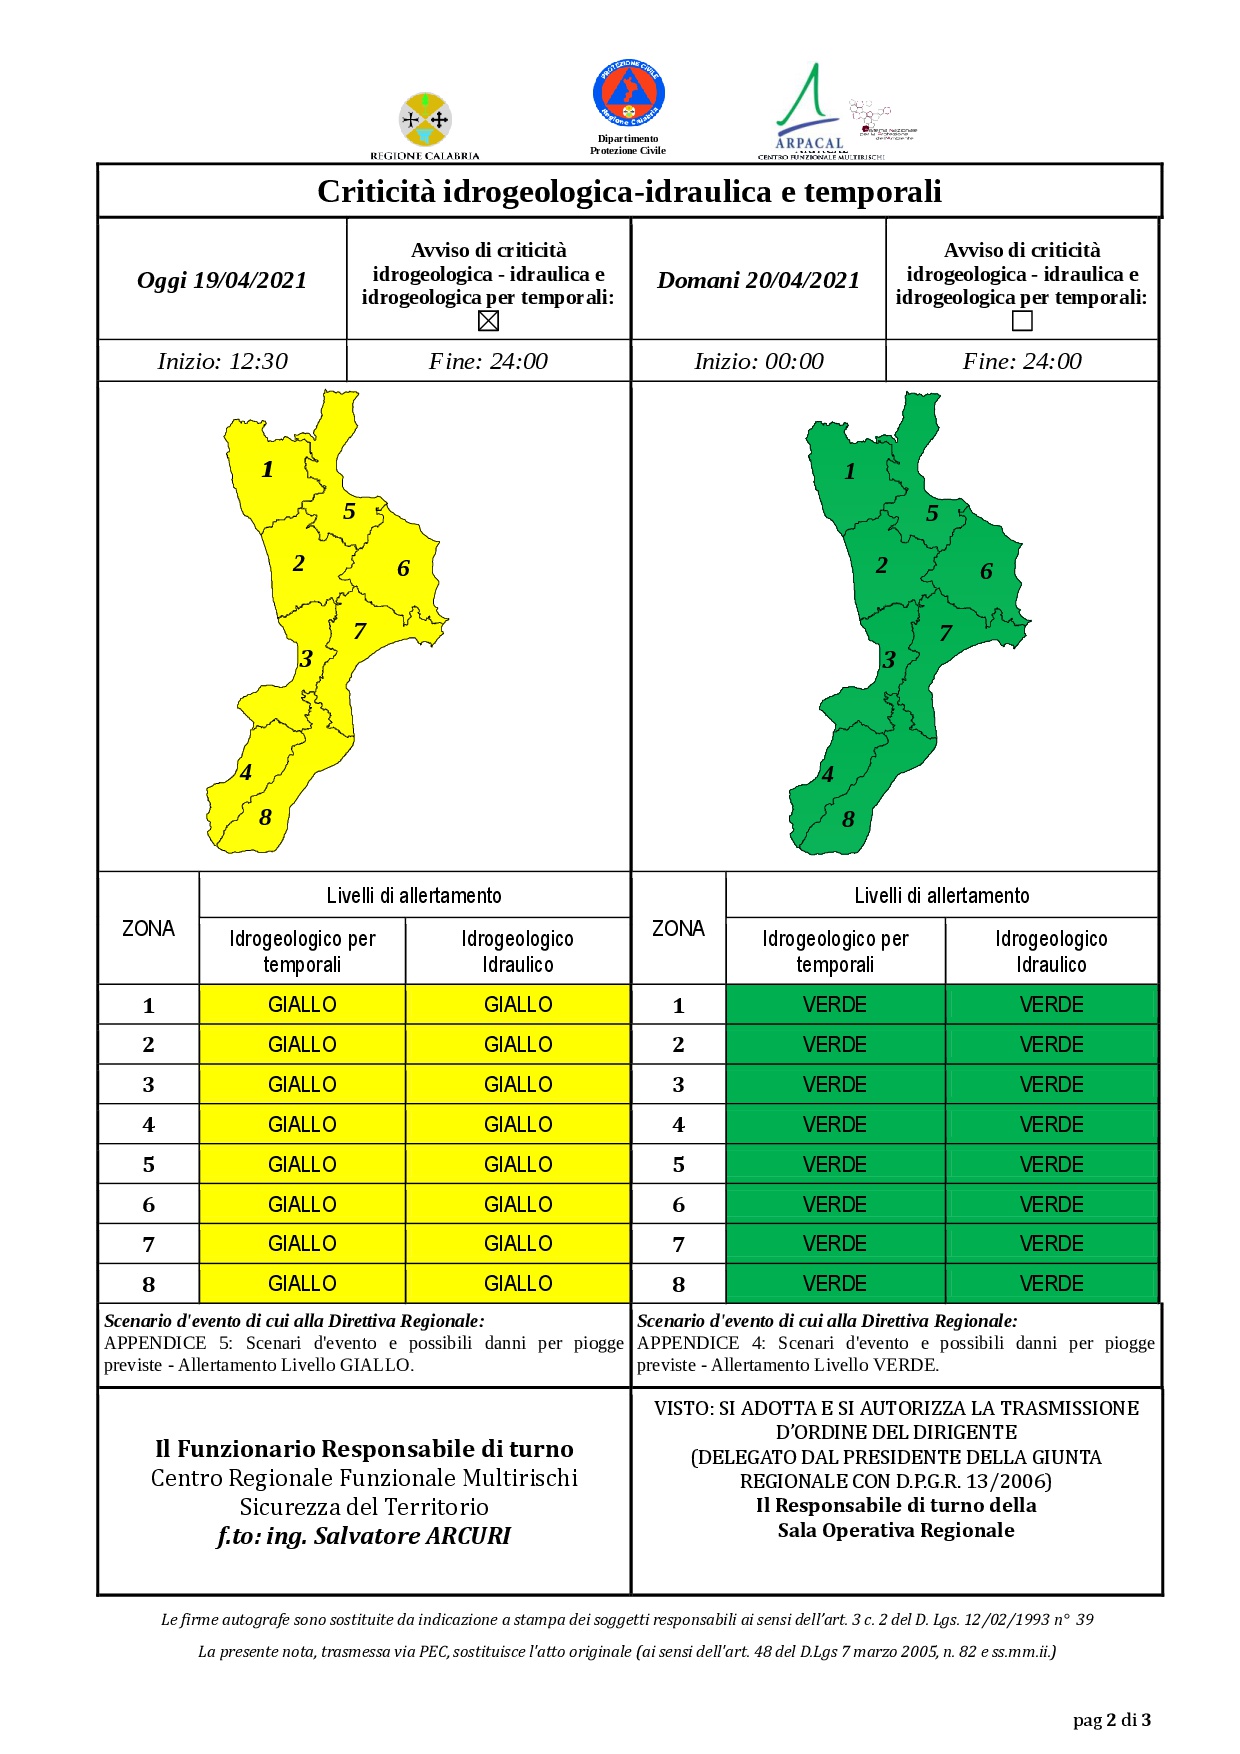 Criticità idrogeologica-idraulica e temporali in Calabria 19-04-2021